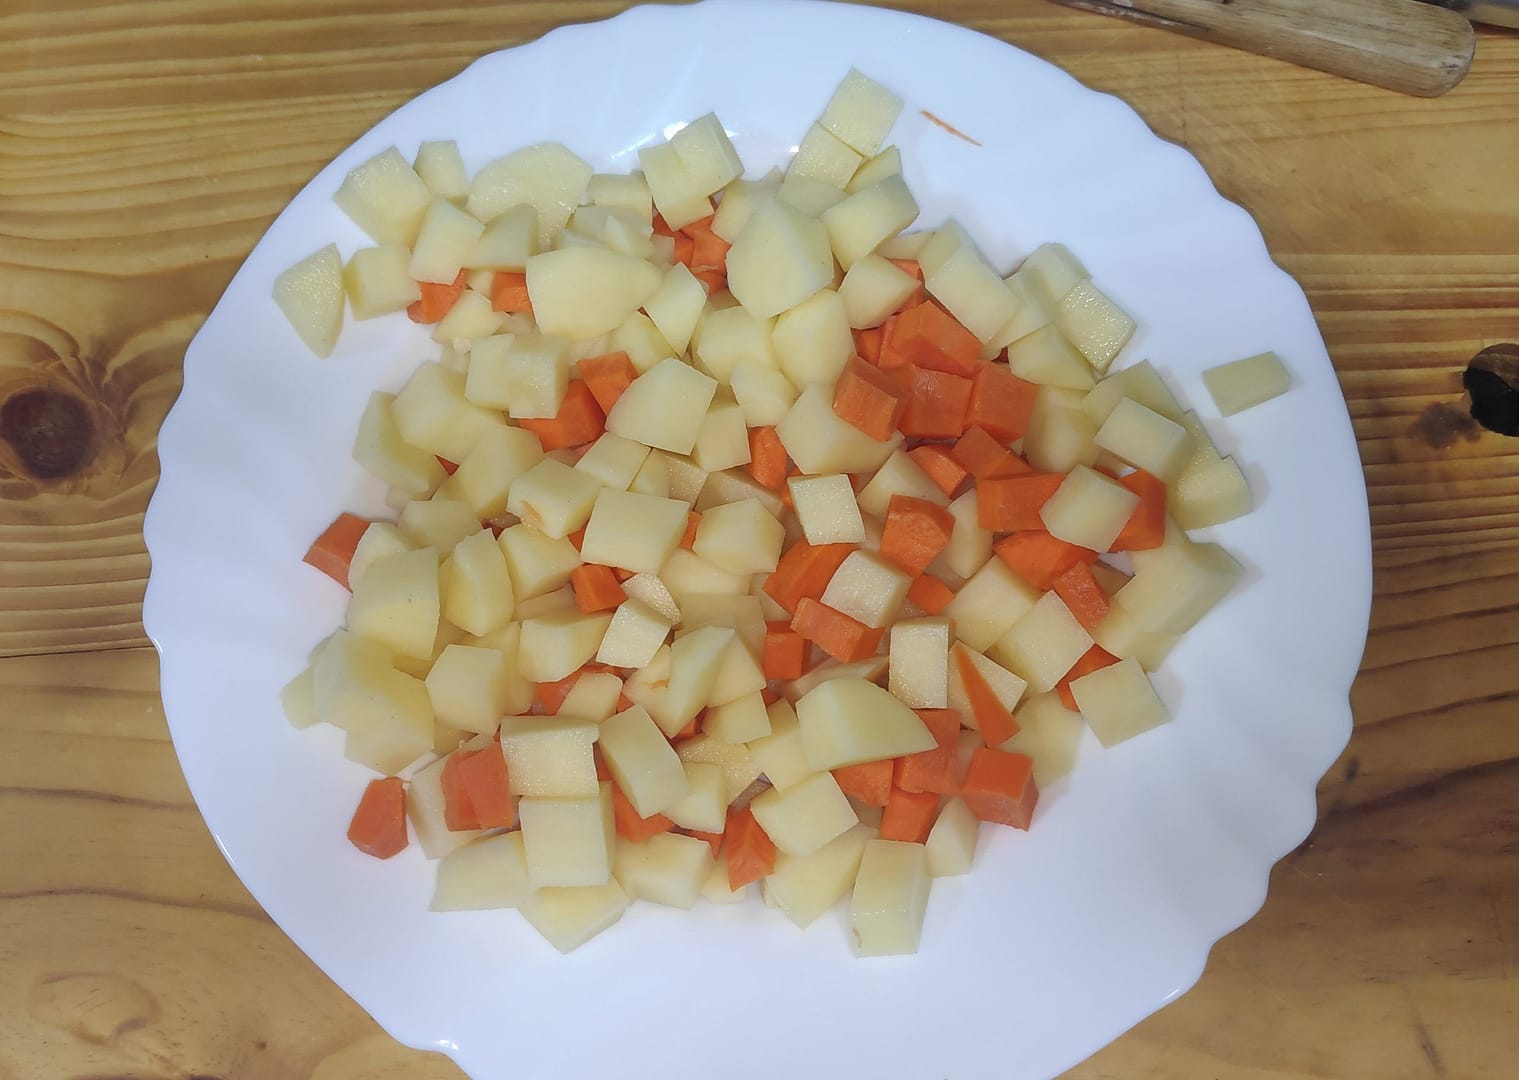 patata y zanahoria cruda cortada